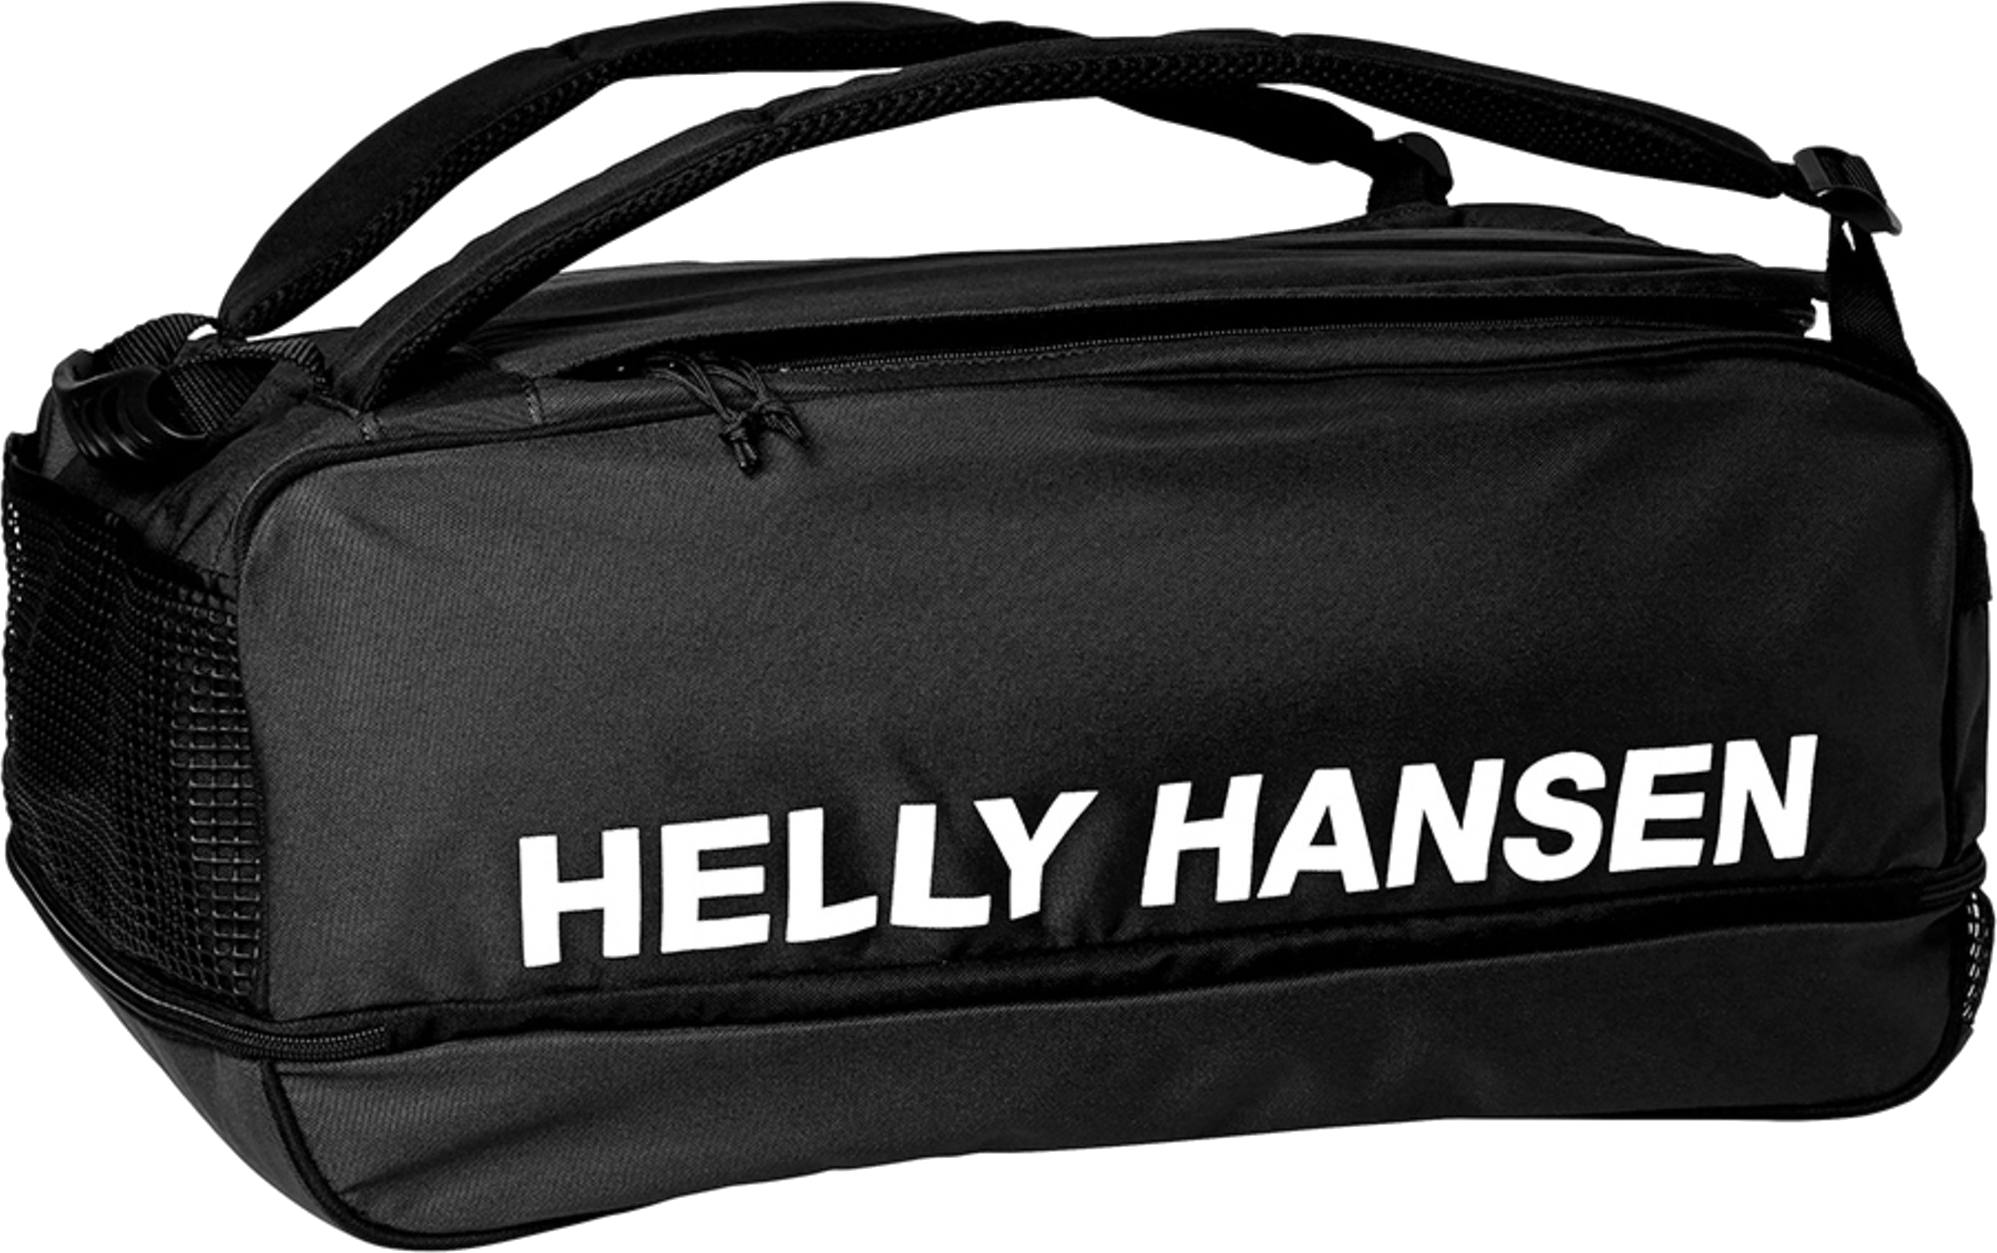 Helly Hansen Racing Bag Black